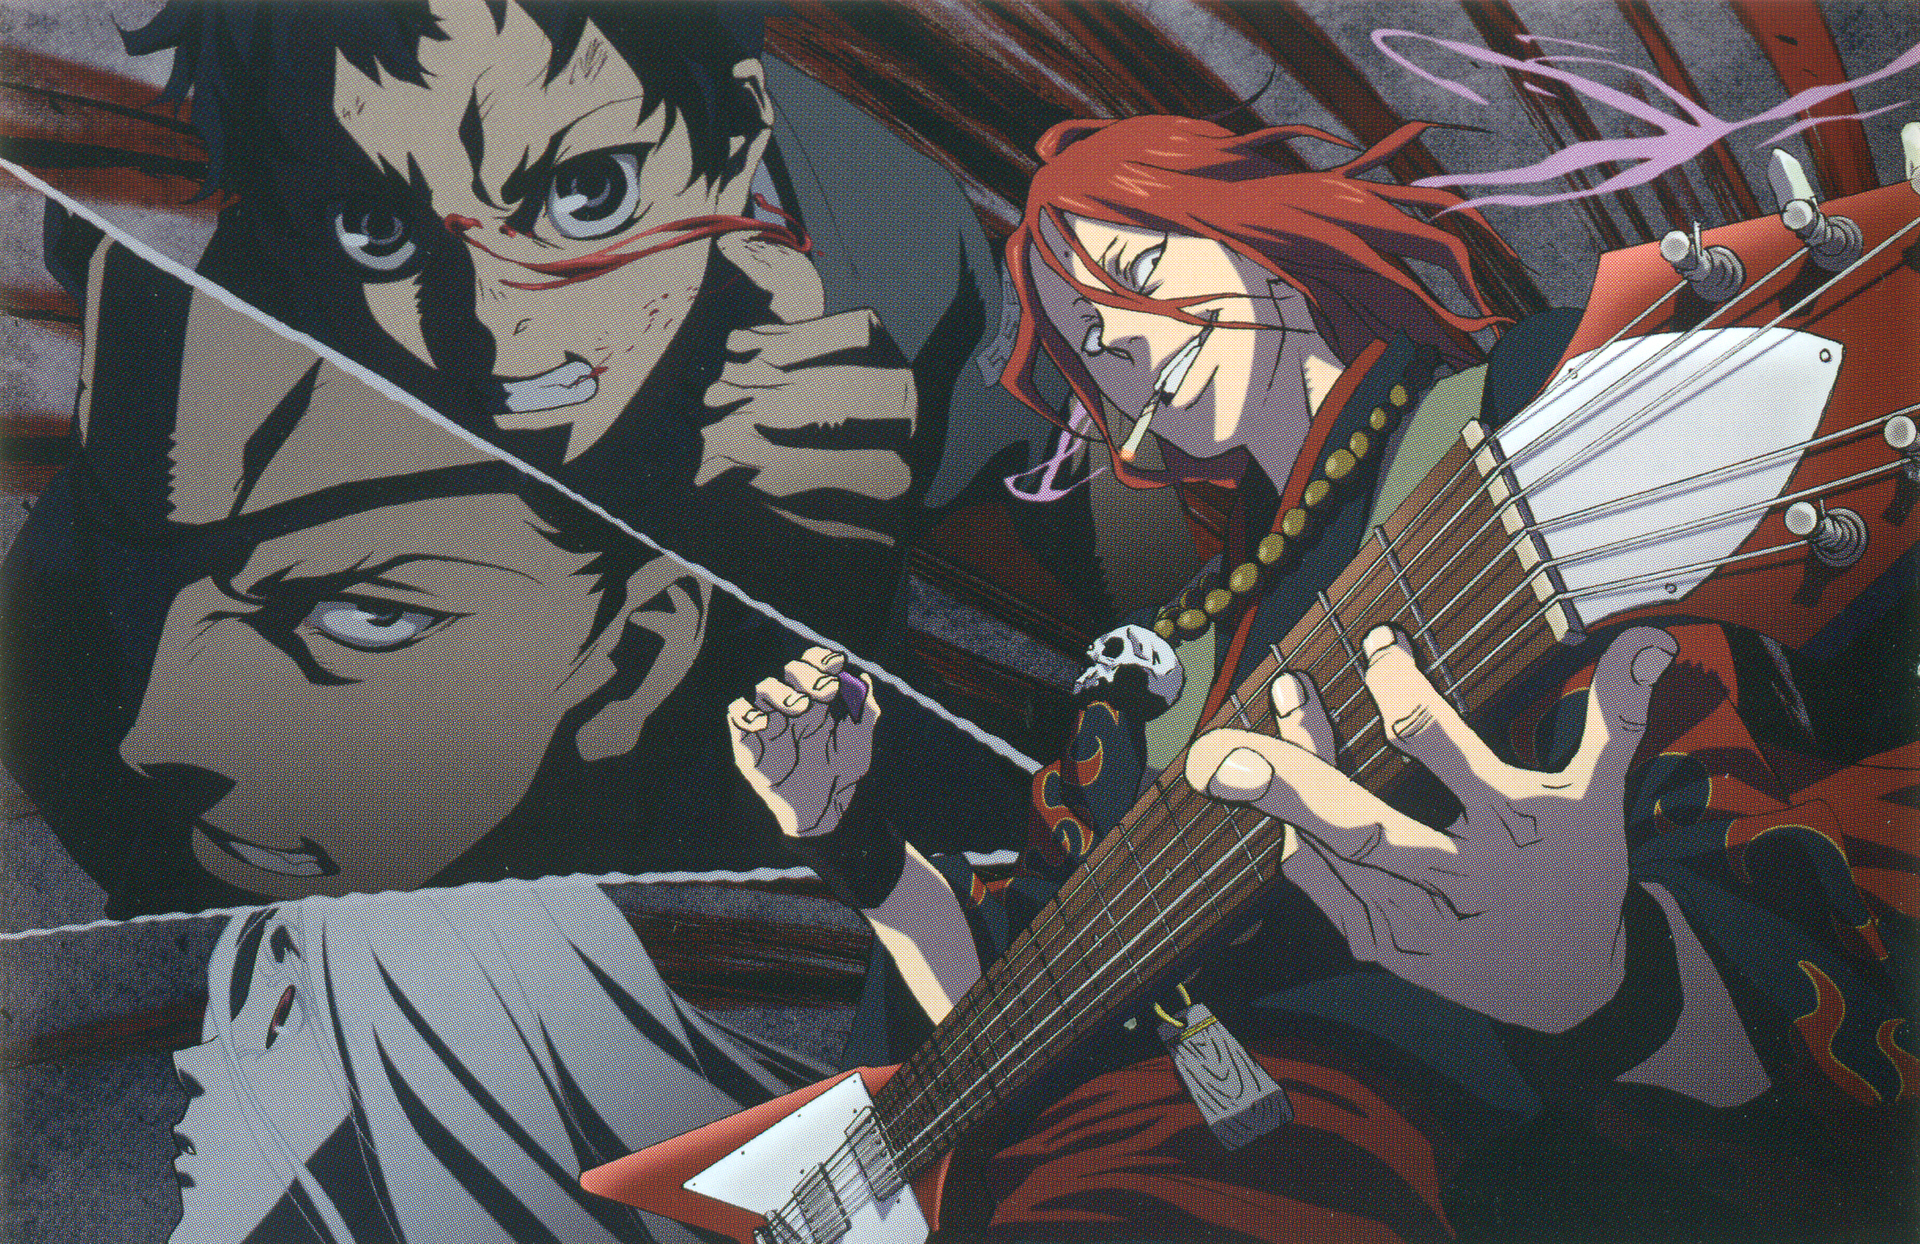 Anime Deadman Wonderland HD Wallpaper | Background Image